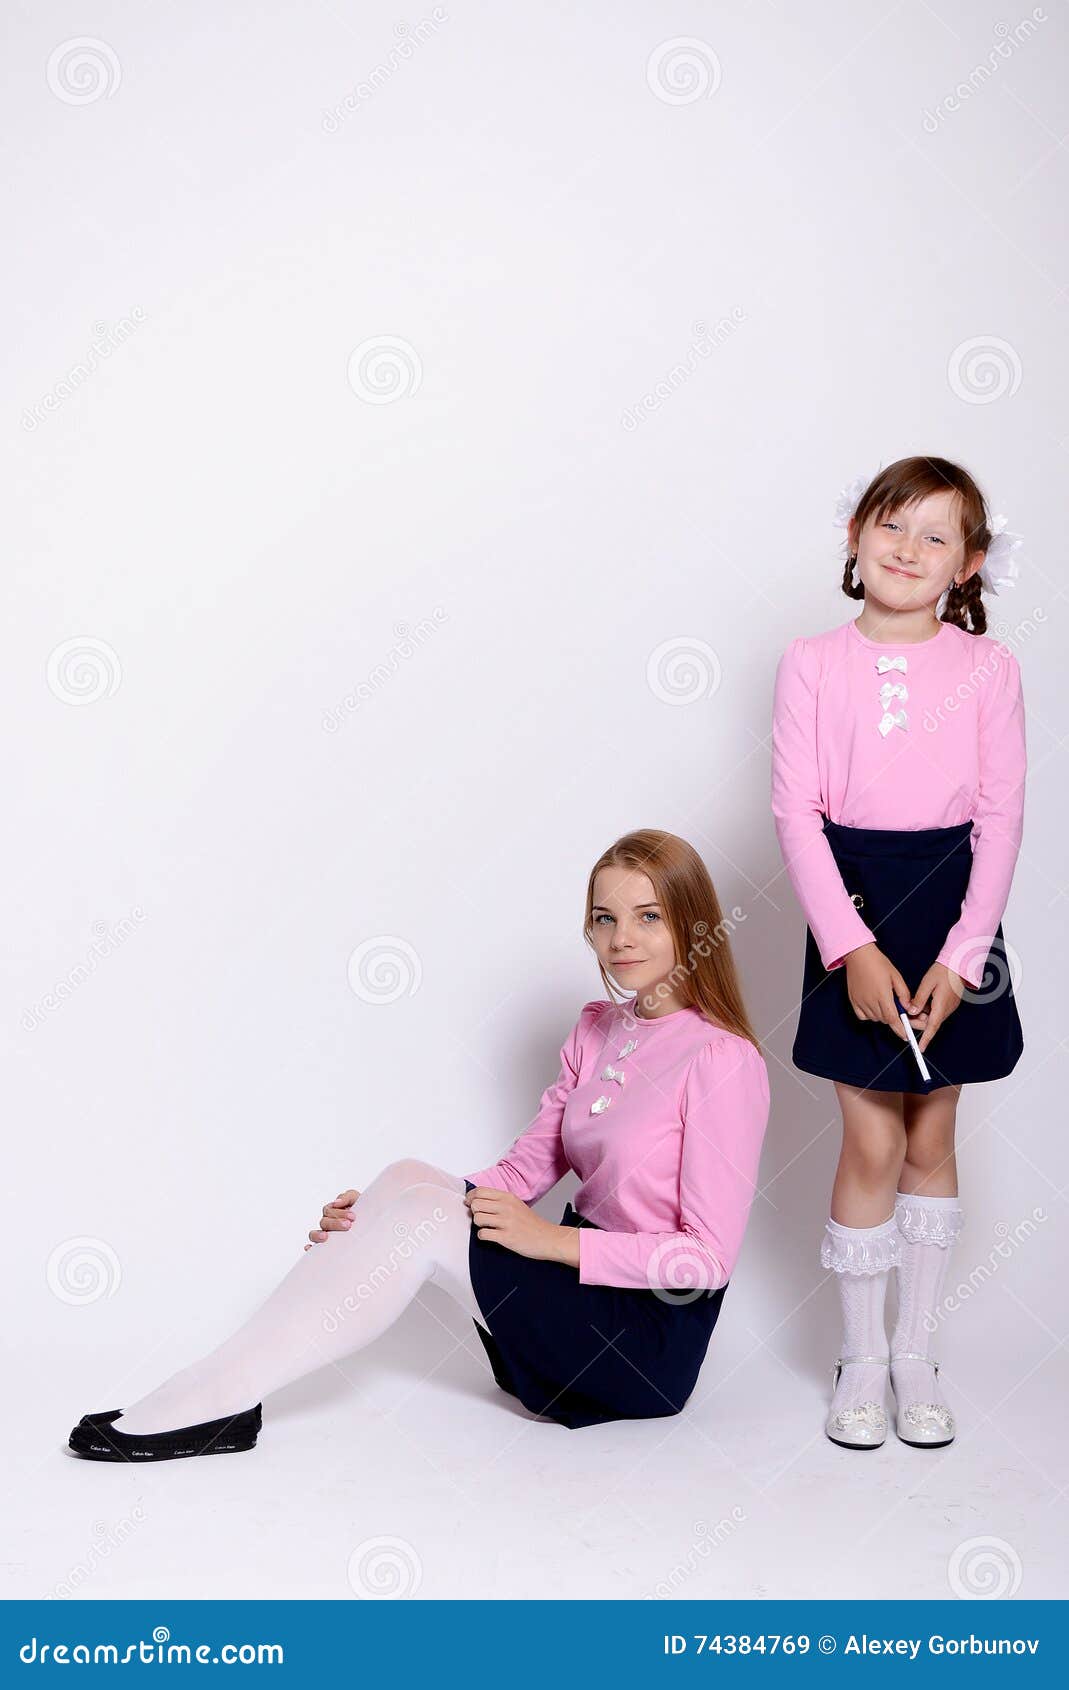 Young School Girls Pics